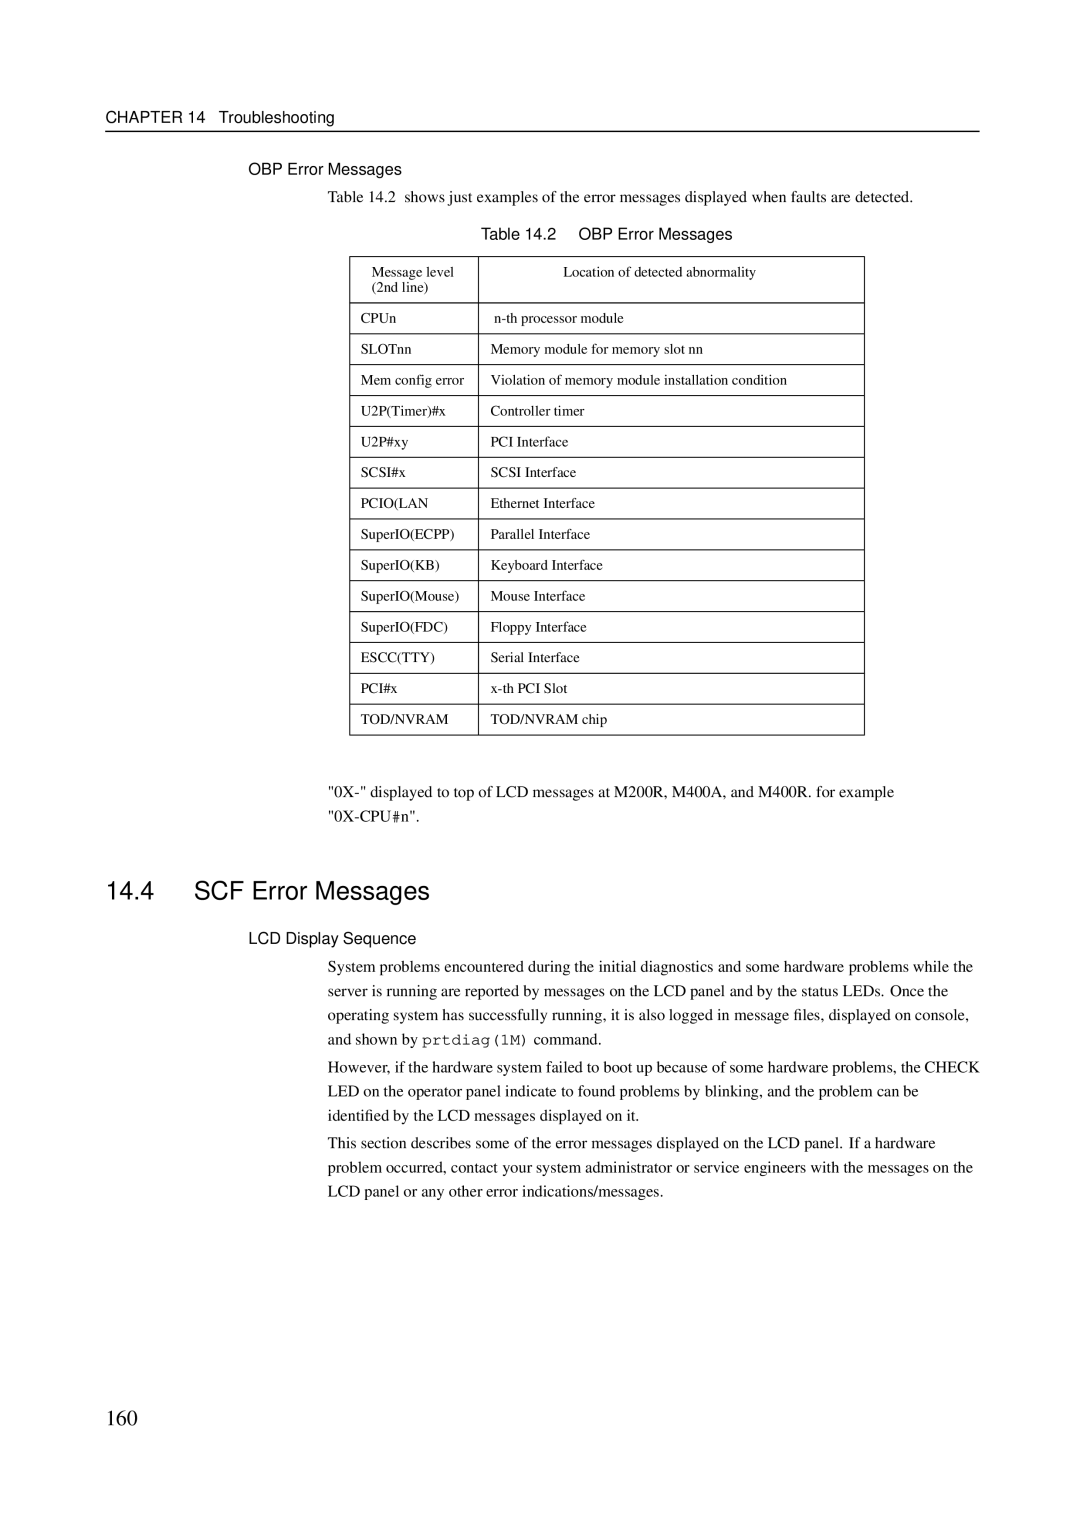 Fujitsu M400R, M600R, M200R, GranPower7000 (GP 7000F) manual SCF Error Messages, 160, Troubleshooting OBP Error Messages 